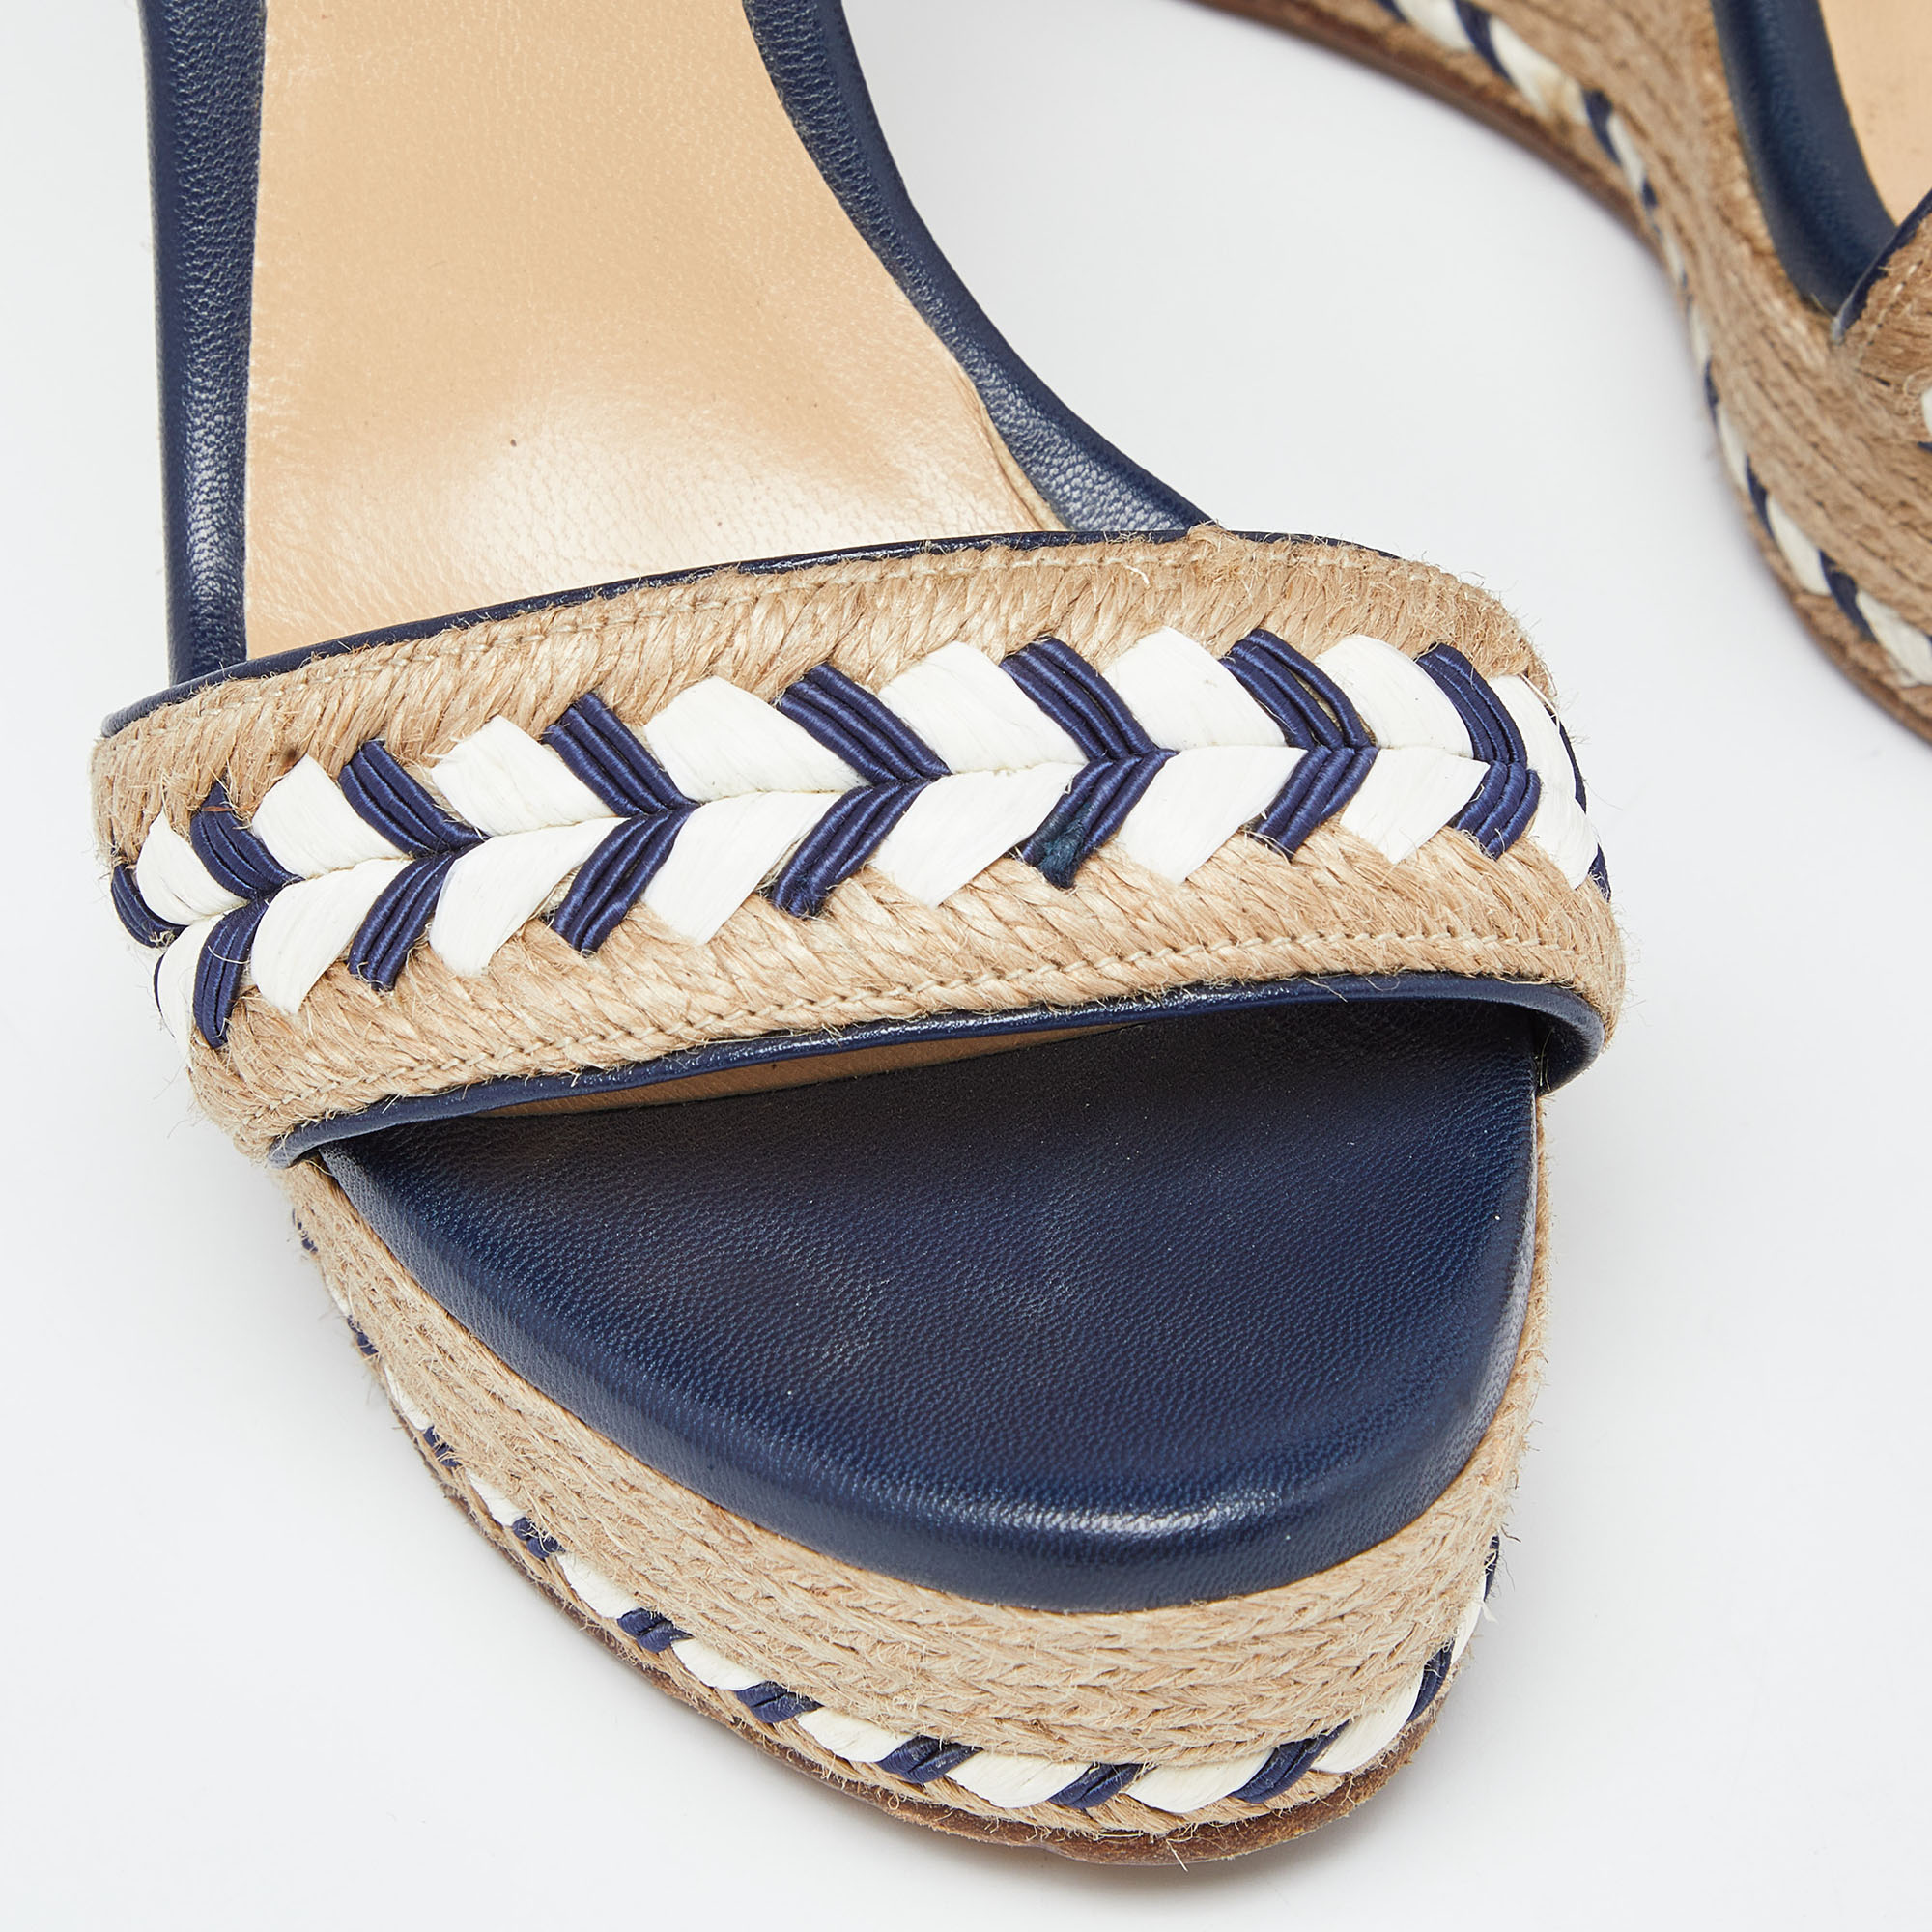 Gucci Beige/Blue Jute And Leather Crystal Embellished Espadrille Wedge Sandals Size 39.5